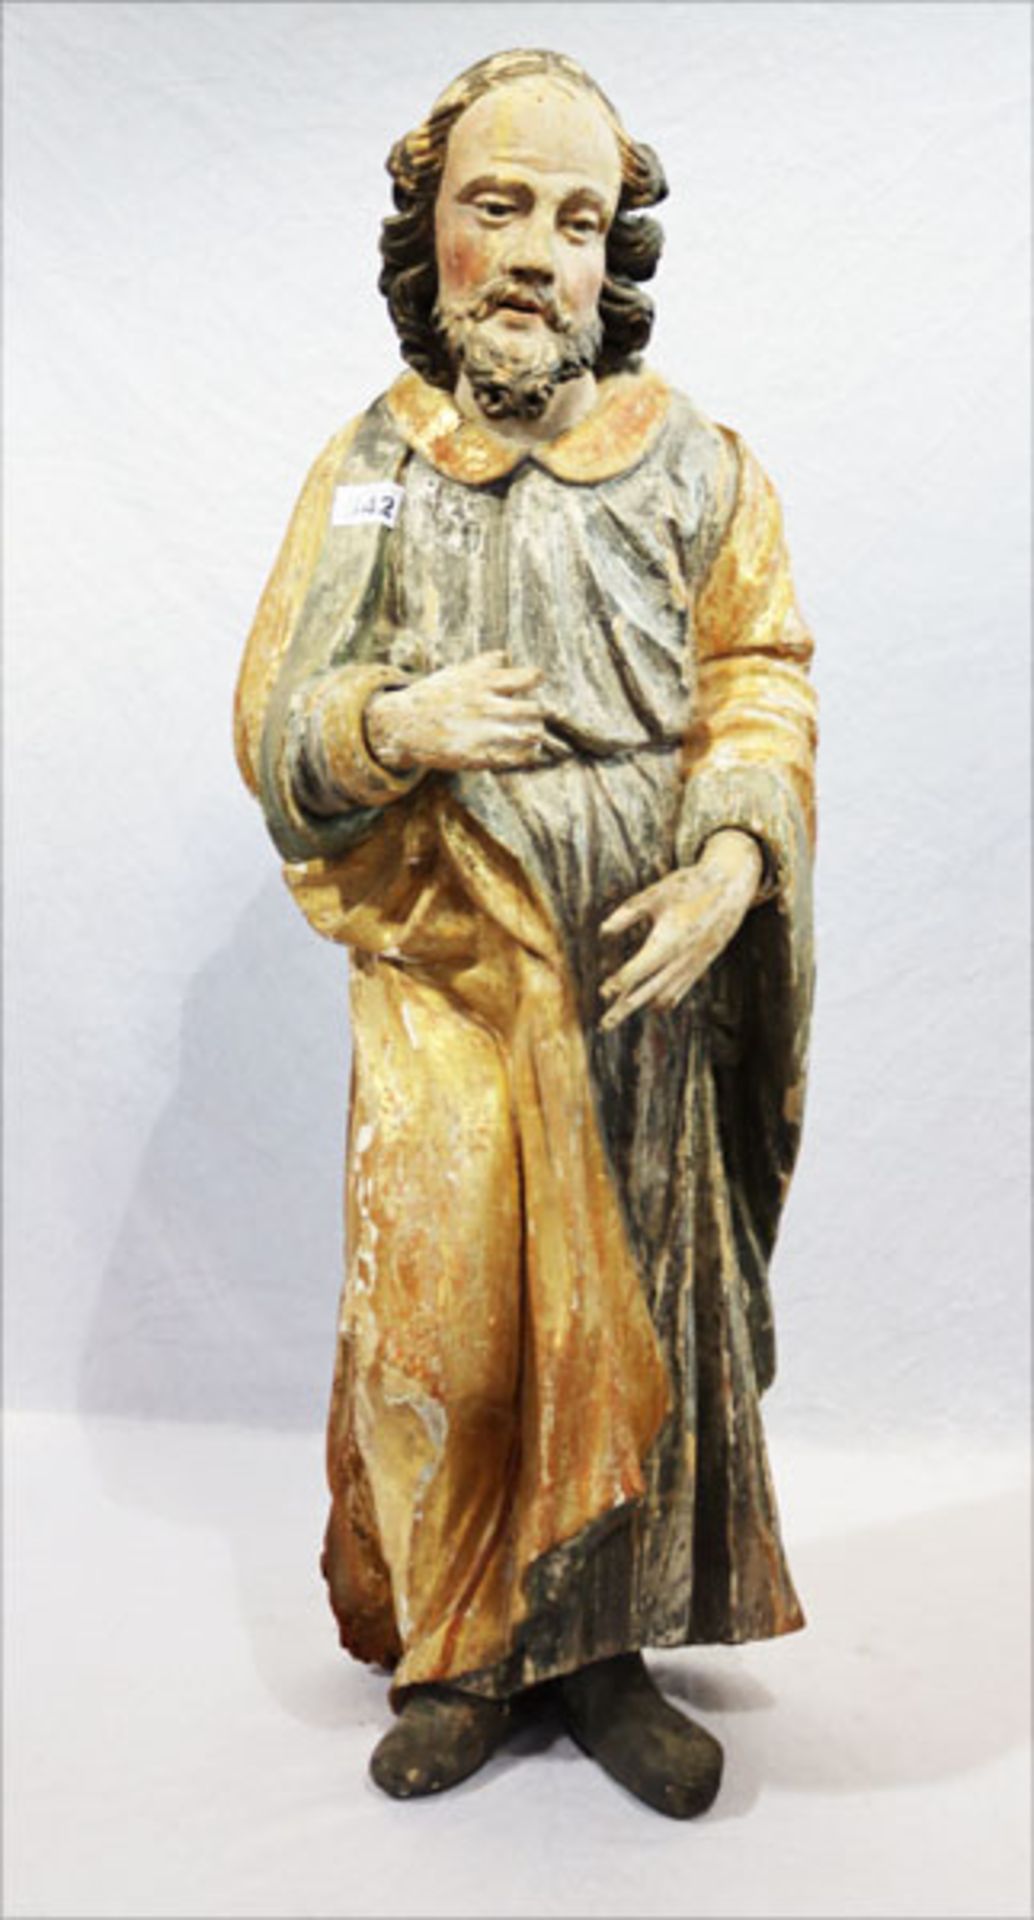 Holz Figurenskulptur 'Jesus', Restfassung um 1800, H 91 cm, altersbedingter Zustand, Holzwürmer